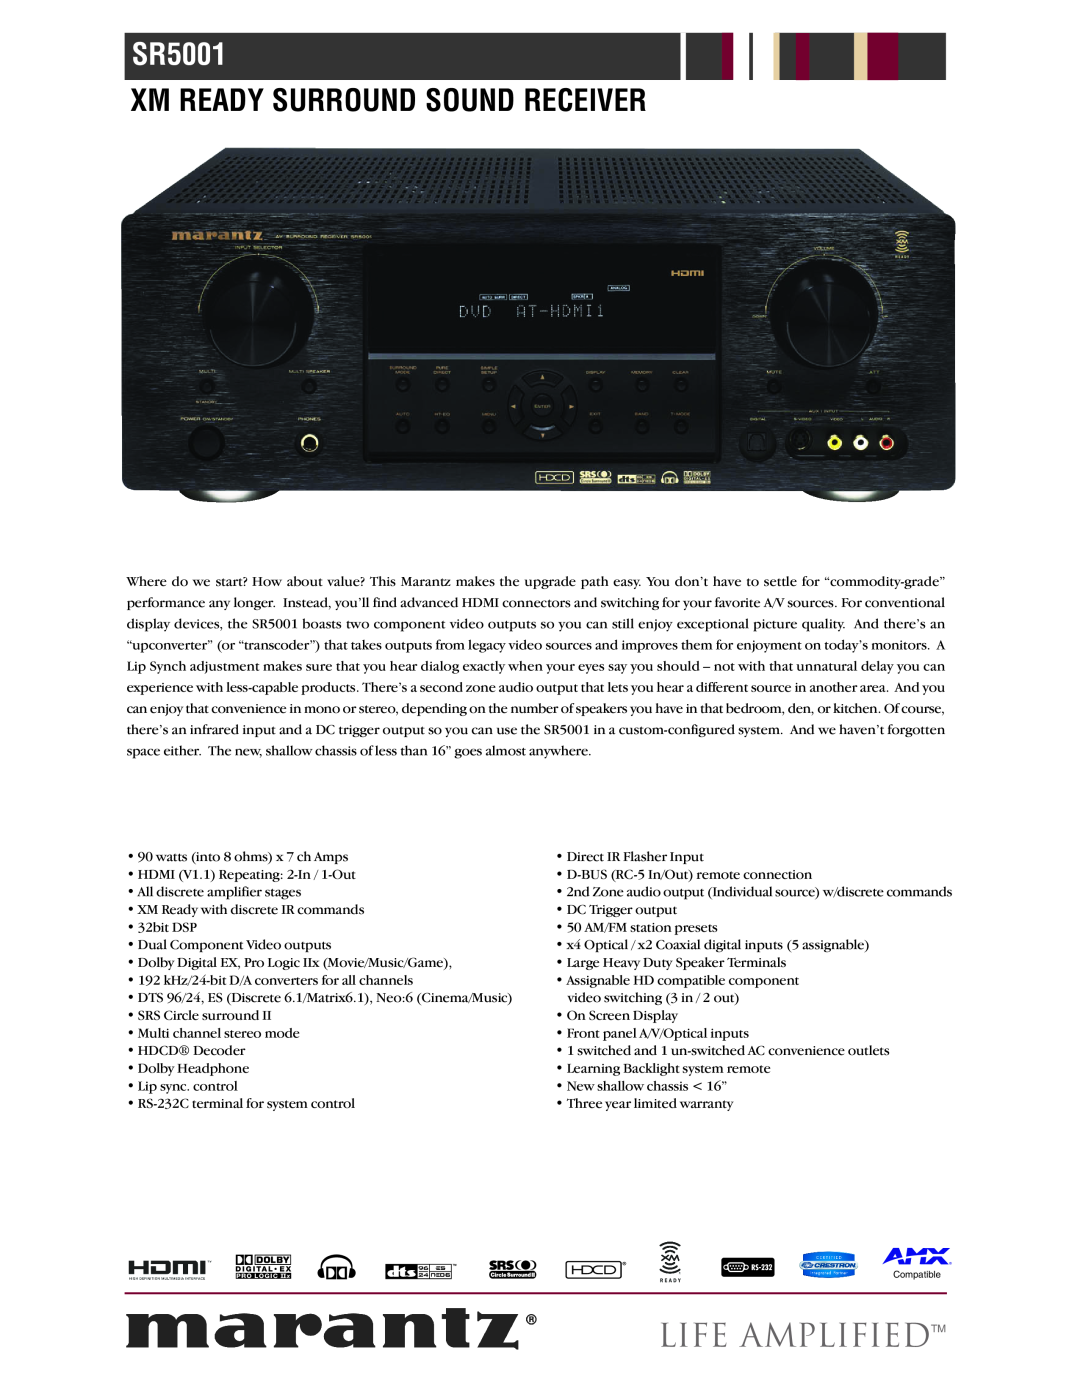 Marantz SR-5001 warranty SR5001, Life Amplifiedtm, Xm Ready Surround Sound Receiver 